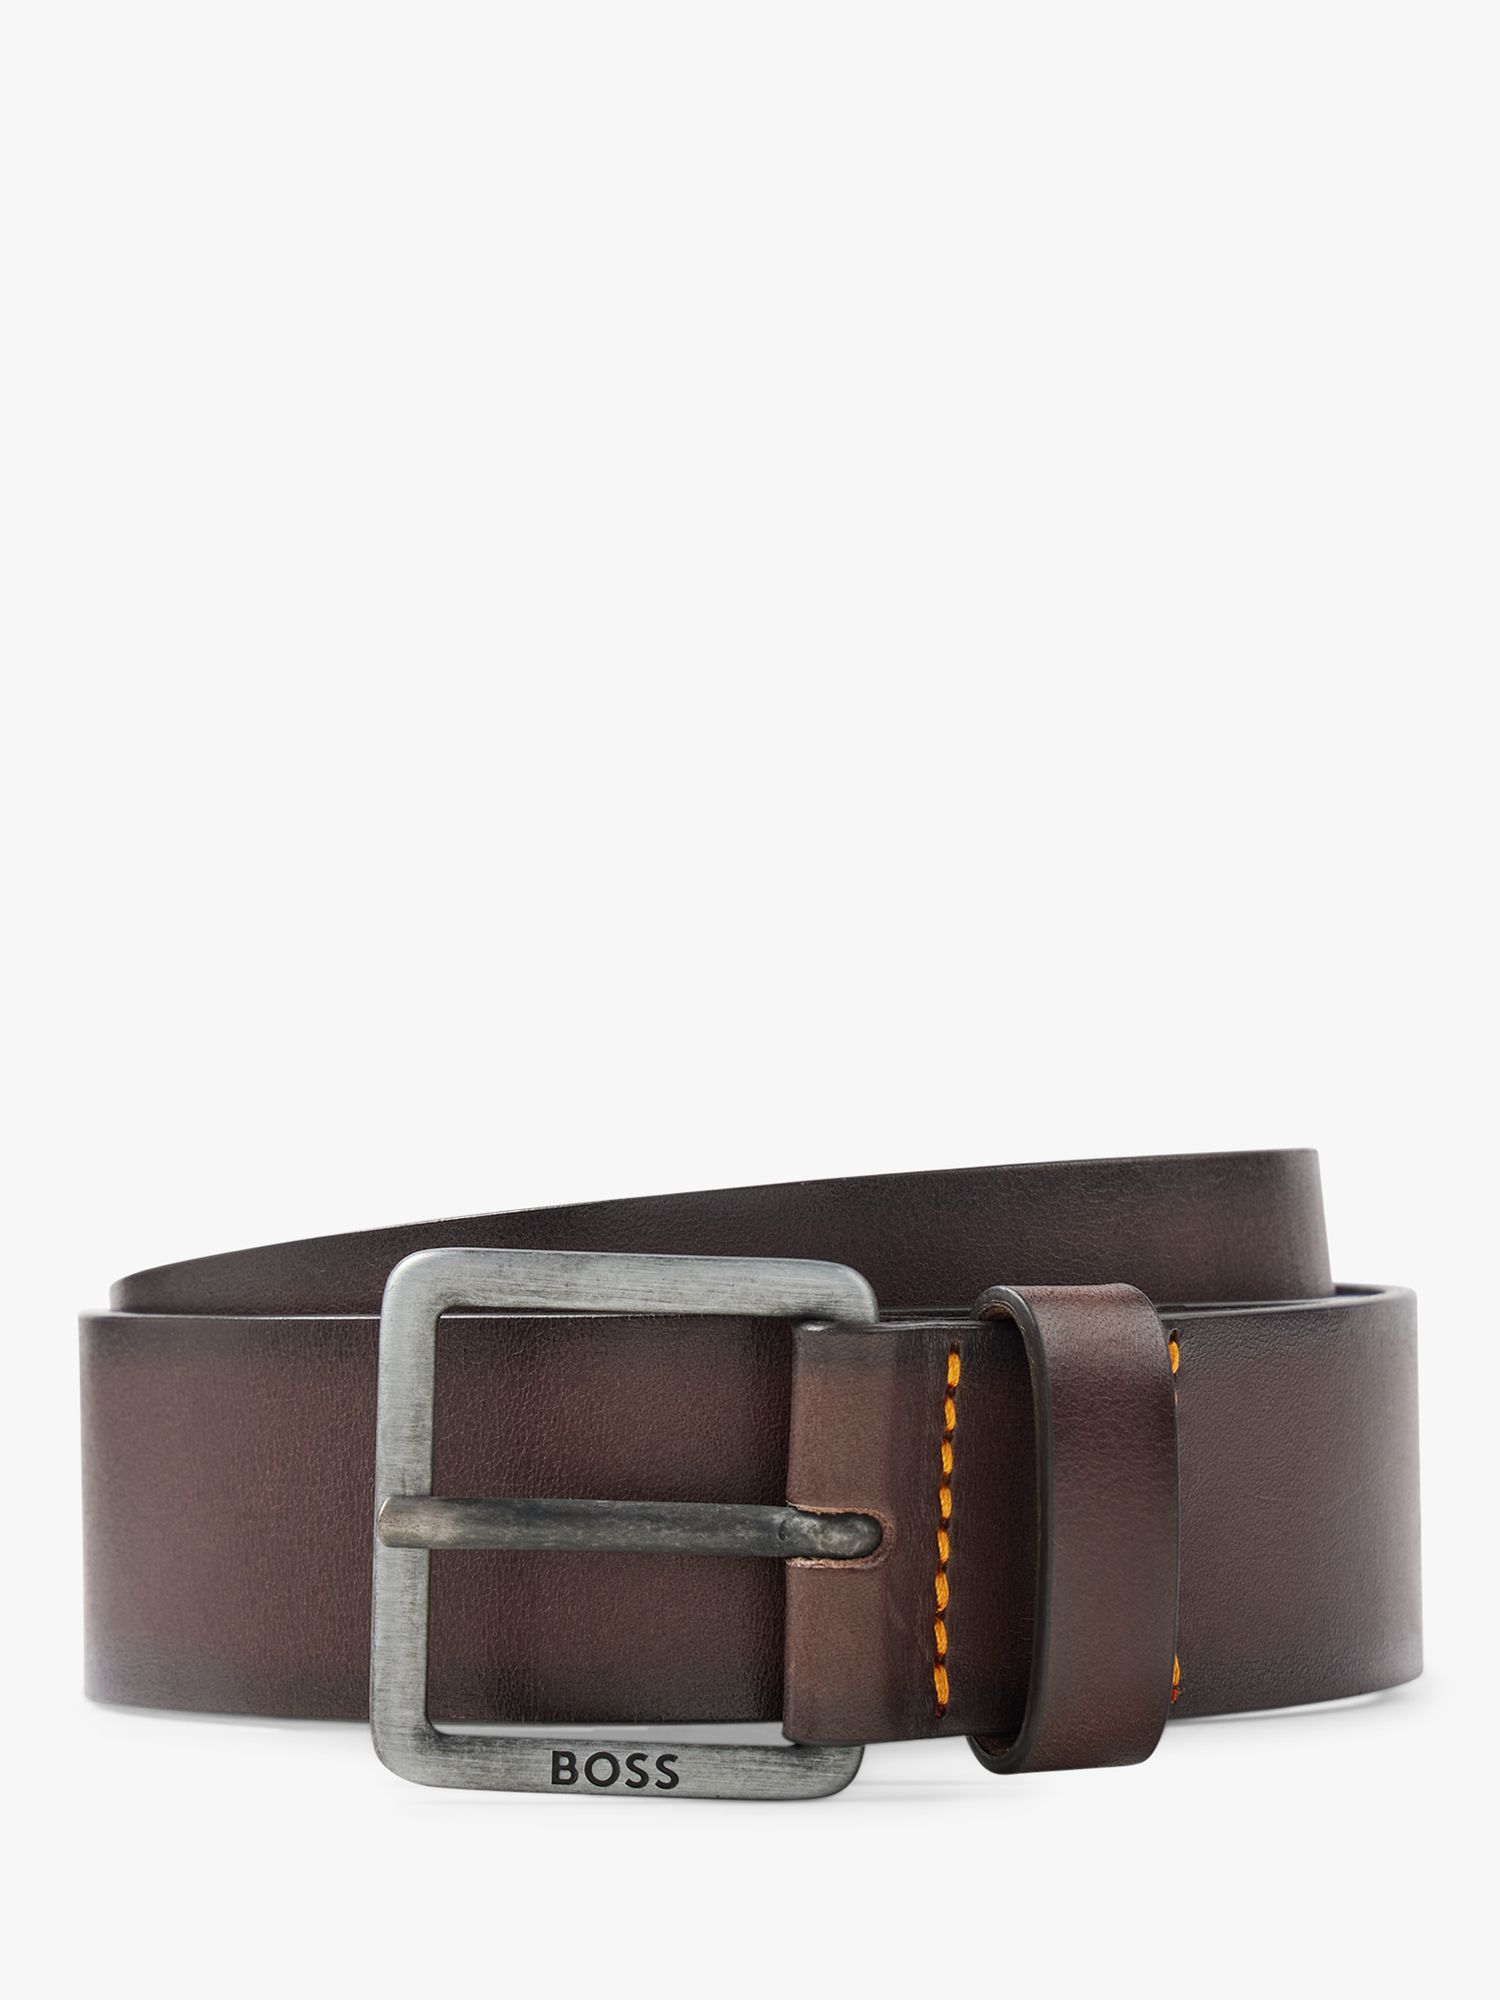 Cognac Leather Belt - Ugo